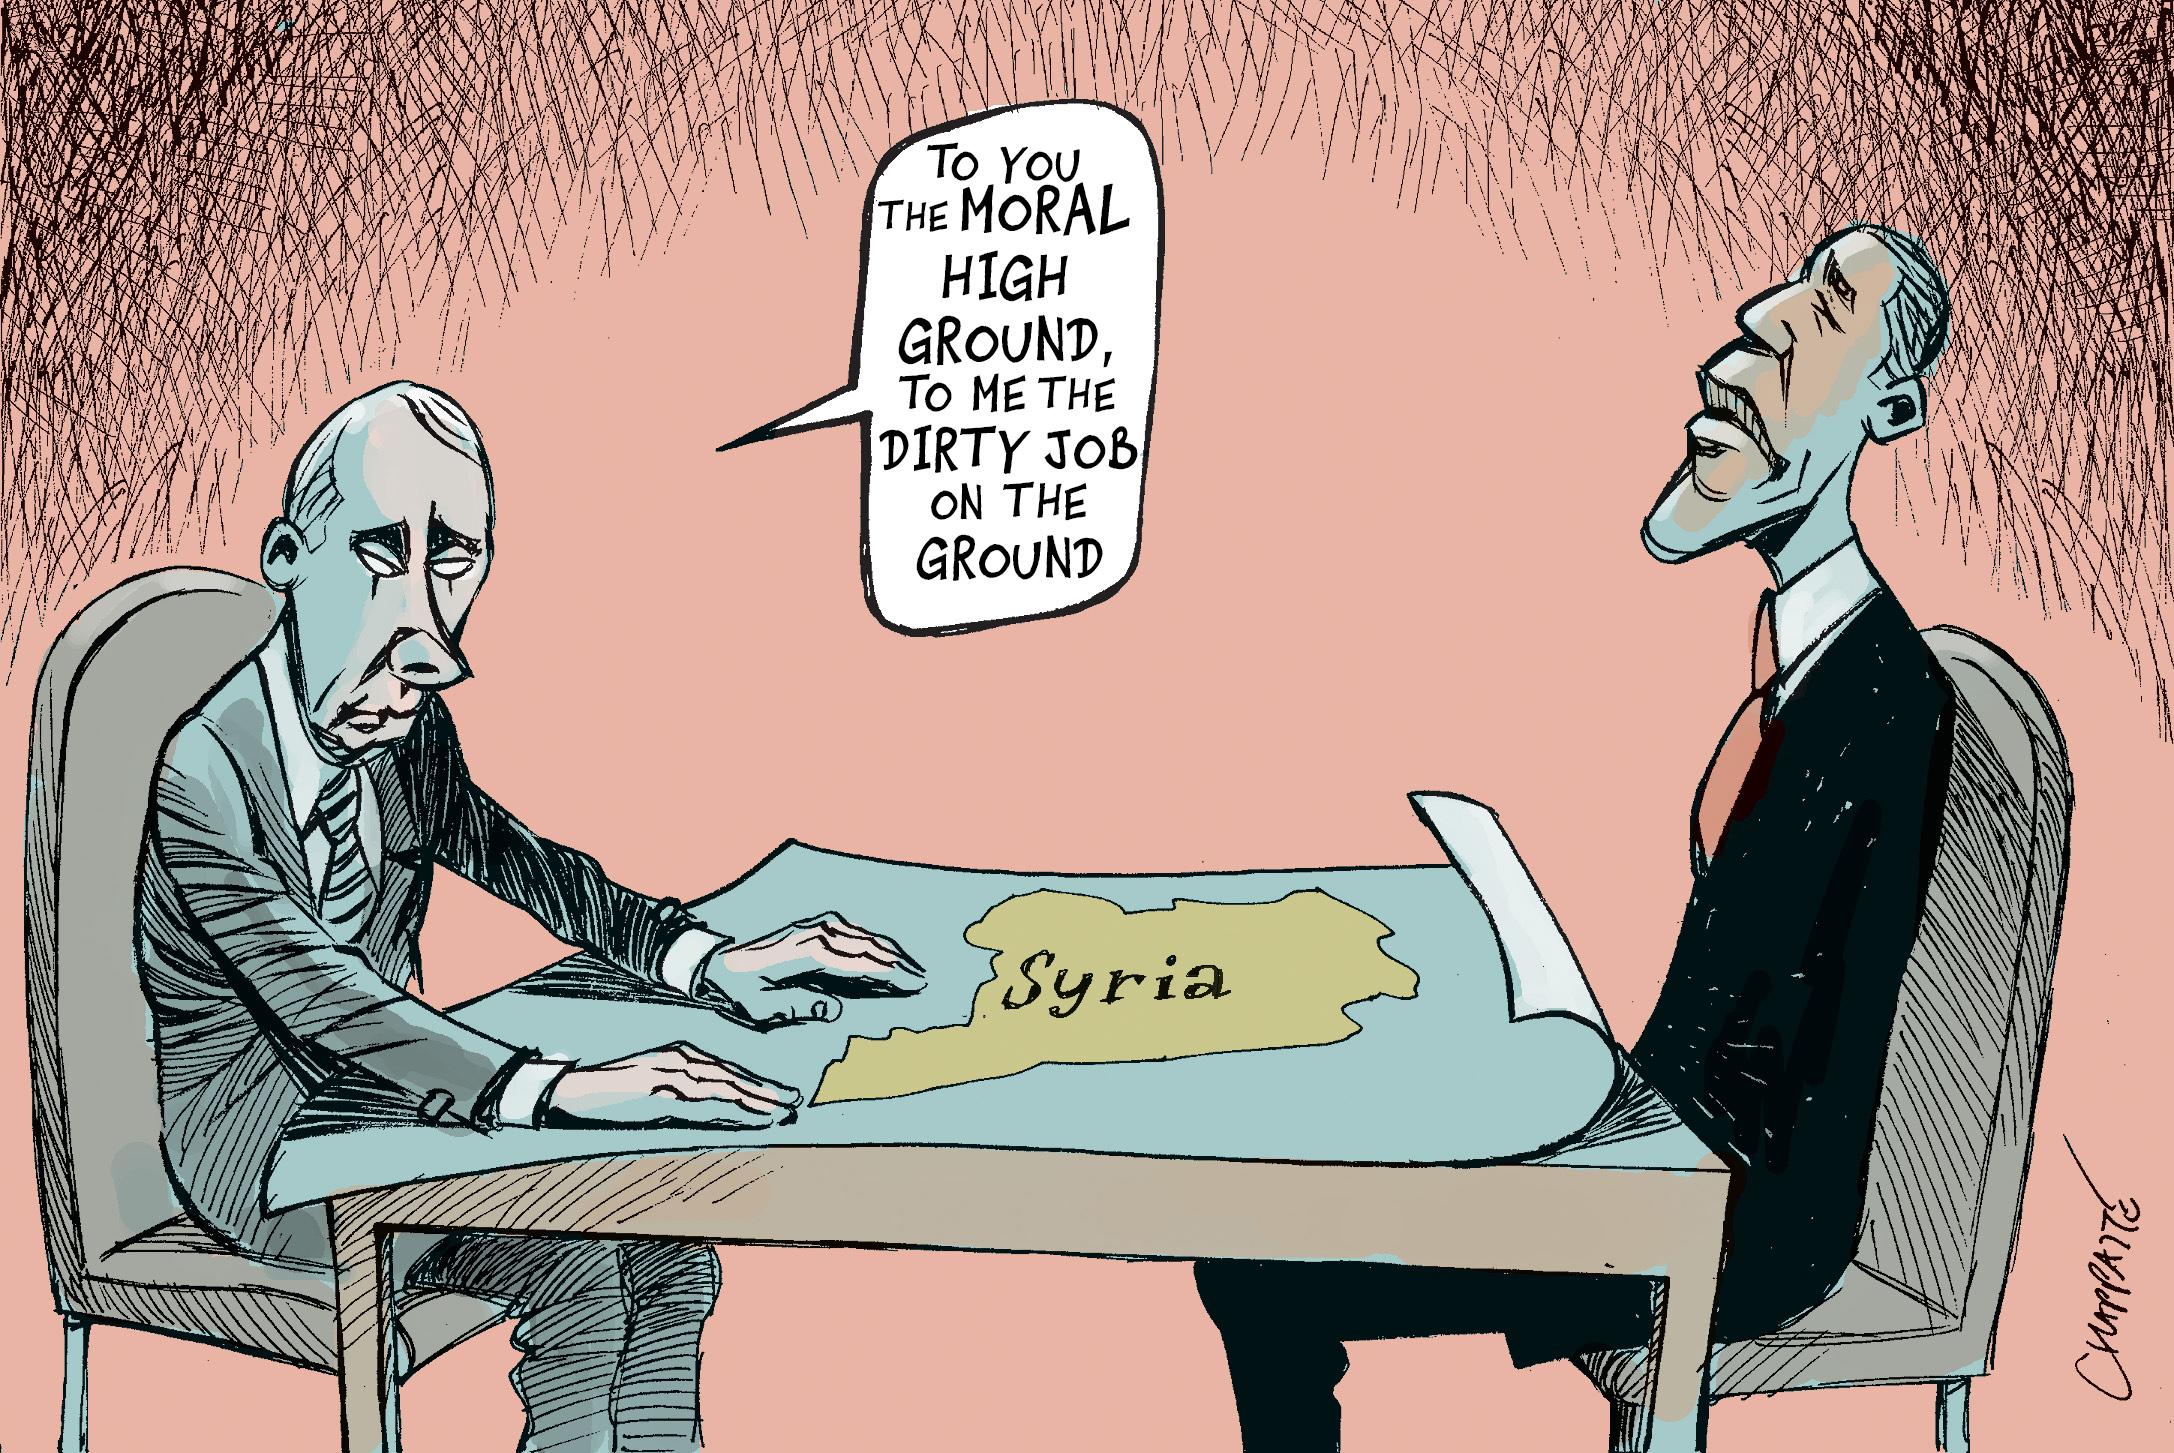 Putin and Obama meeting